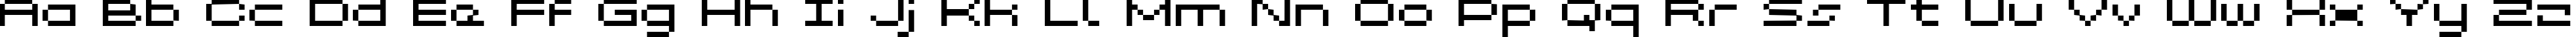 Пример написания английского алфавита шрифтом Grixel Kyrou 5 Wide